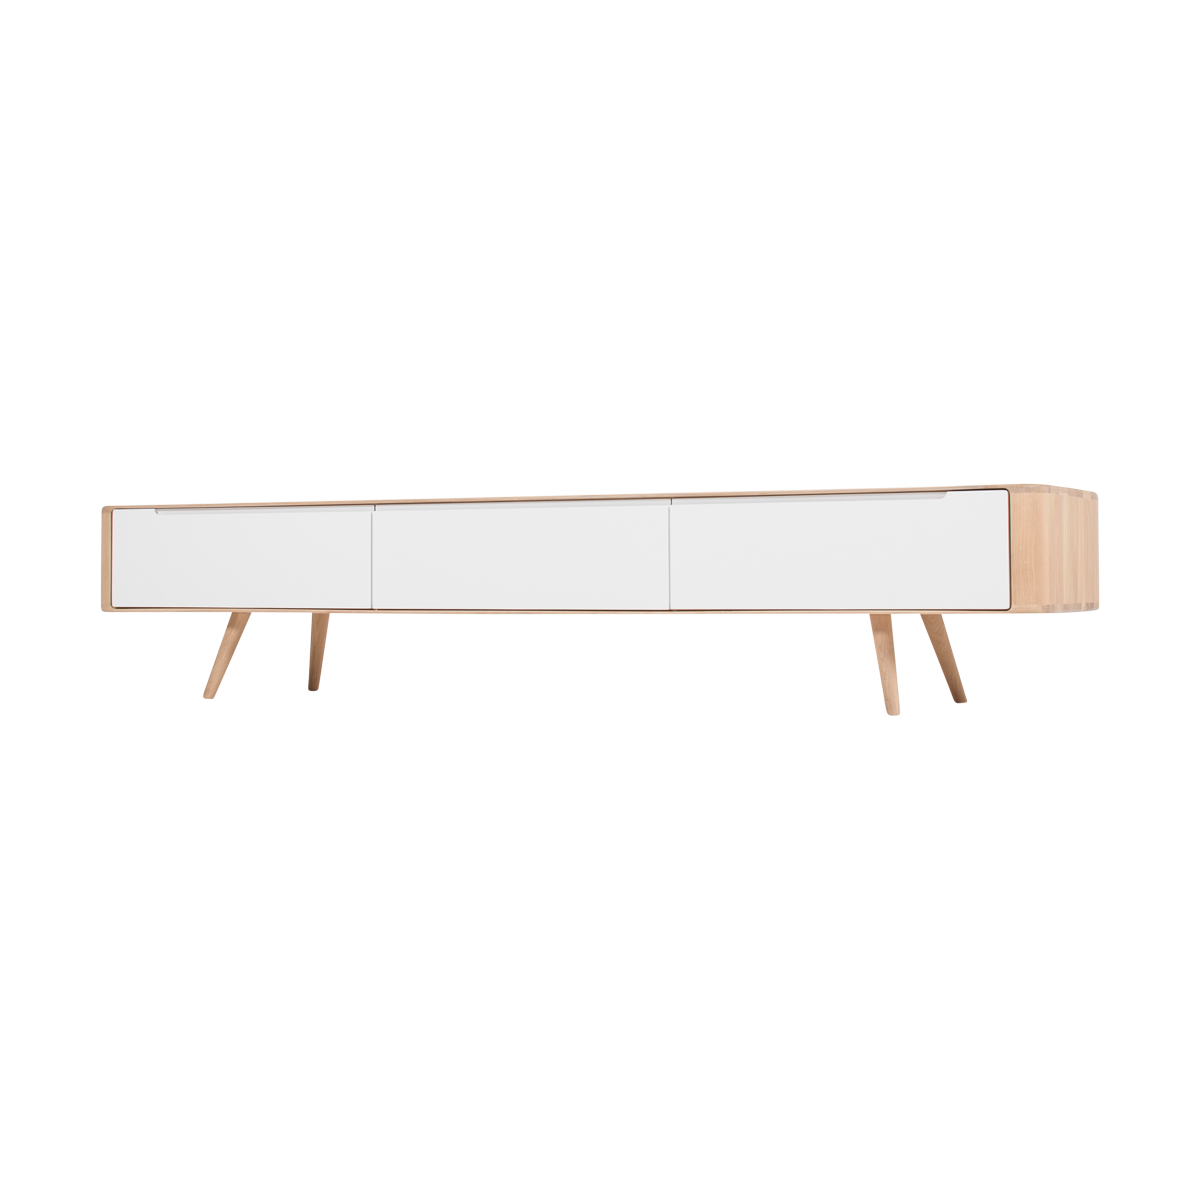 Ena lowboard houten tv meubel whitewash - 225 x 42 cm